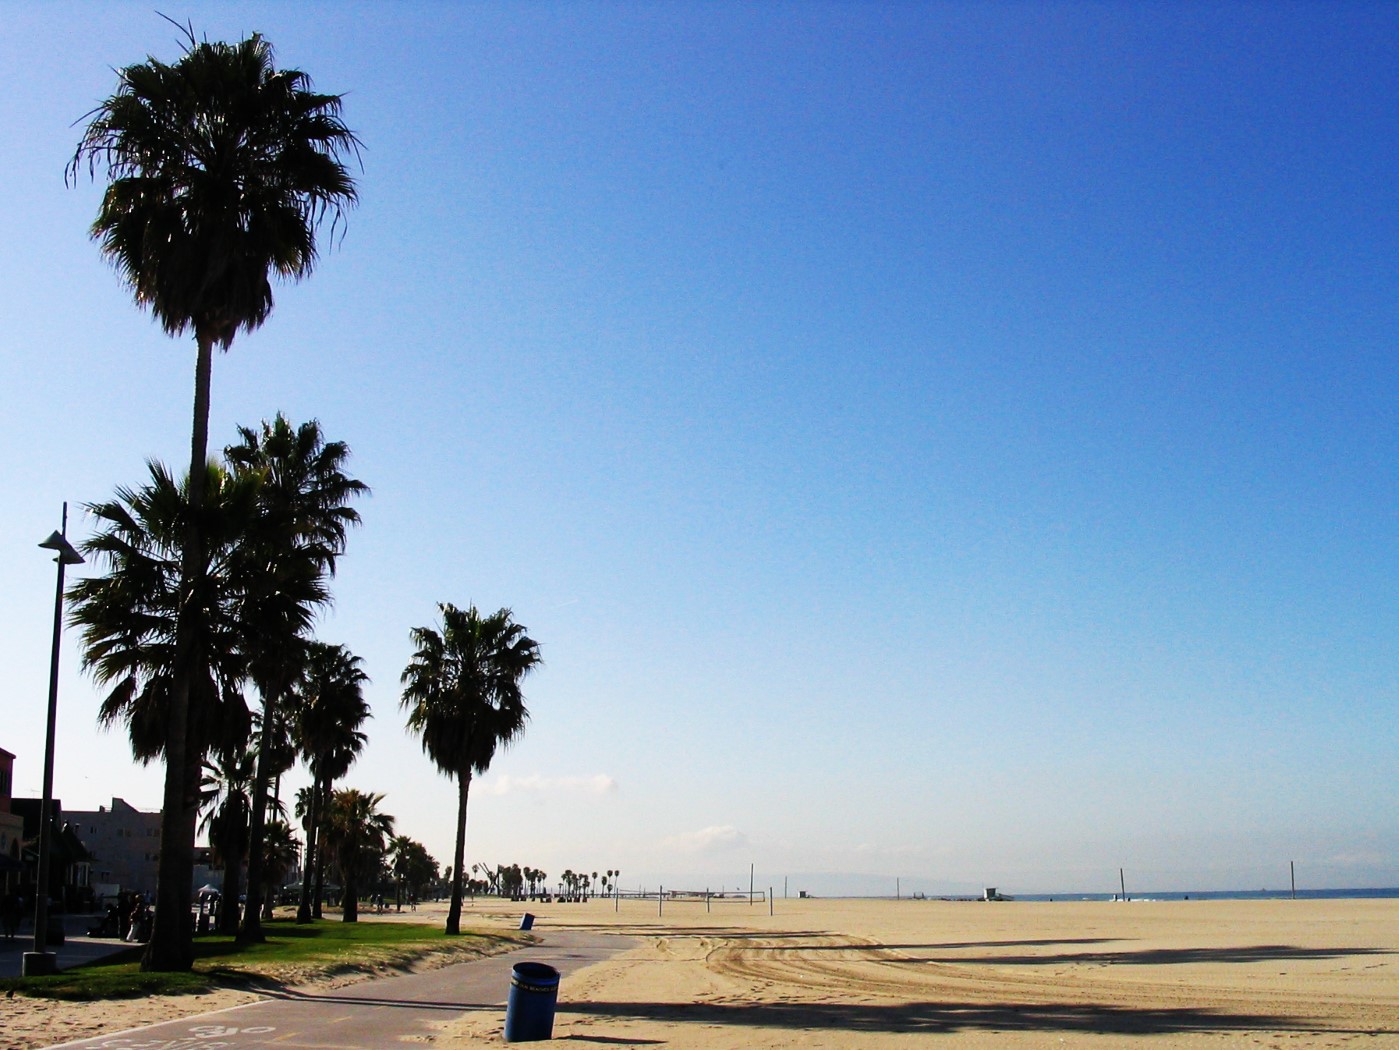 Venice City Beach, Los Angeles, CA - California Beaches